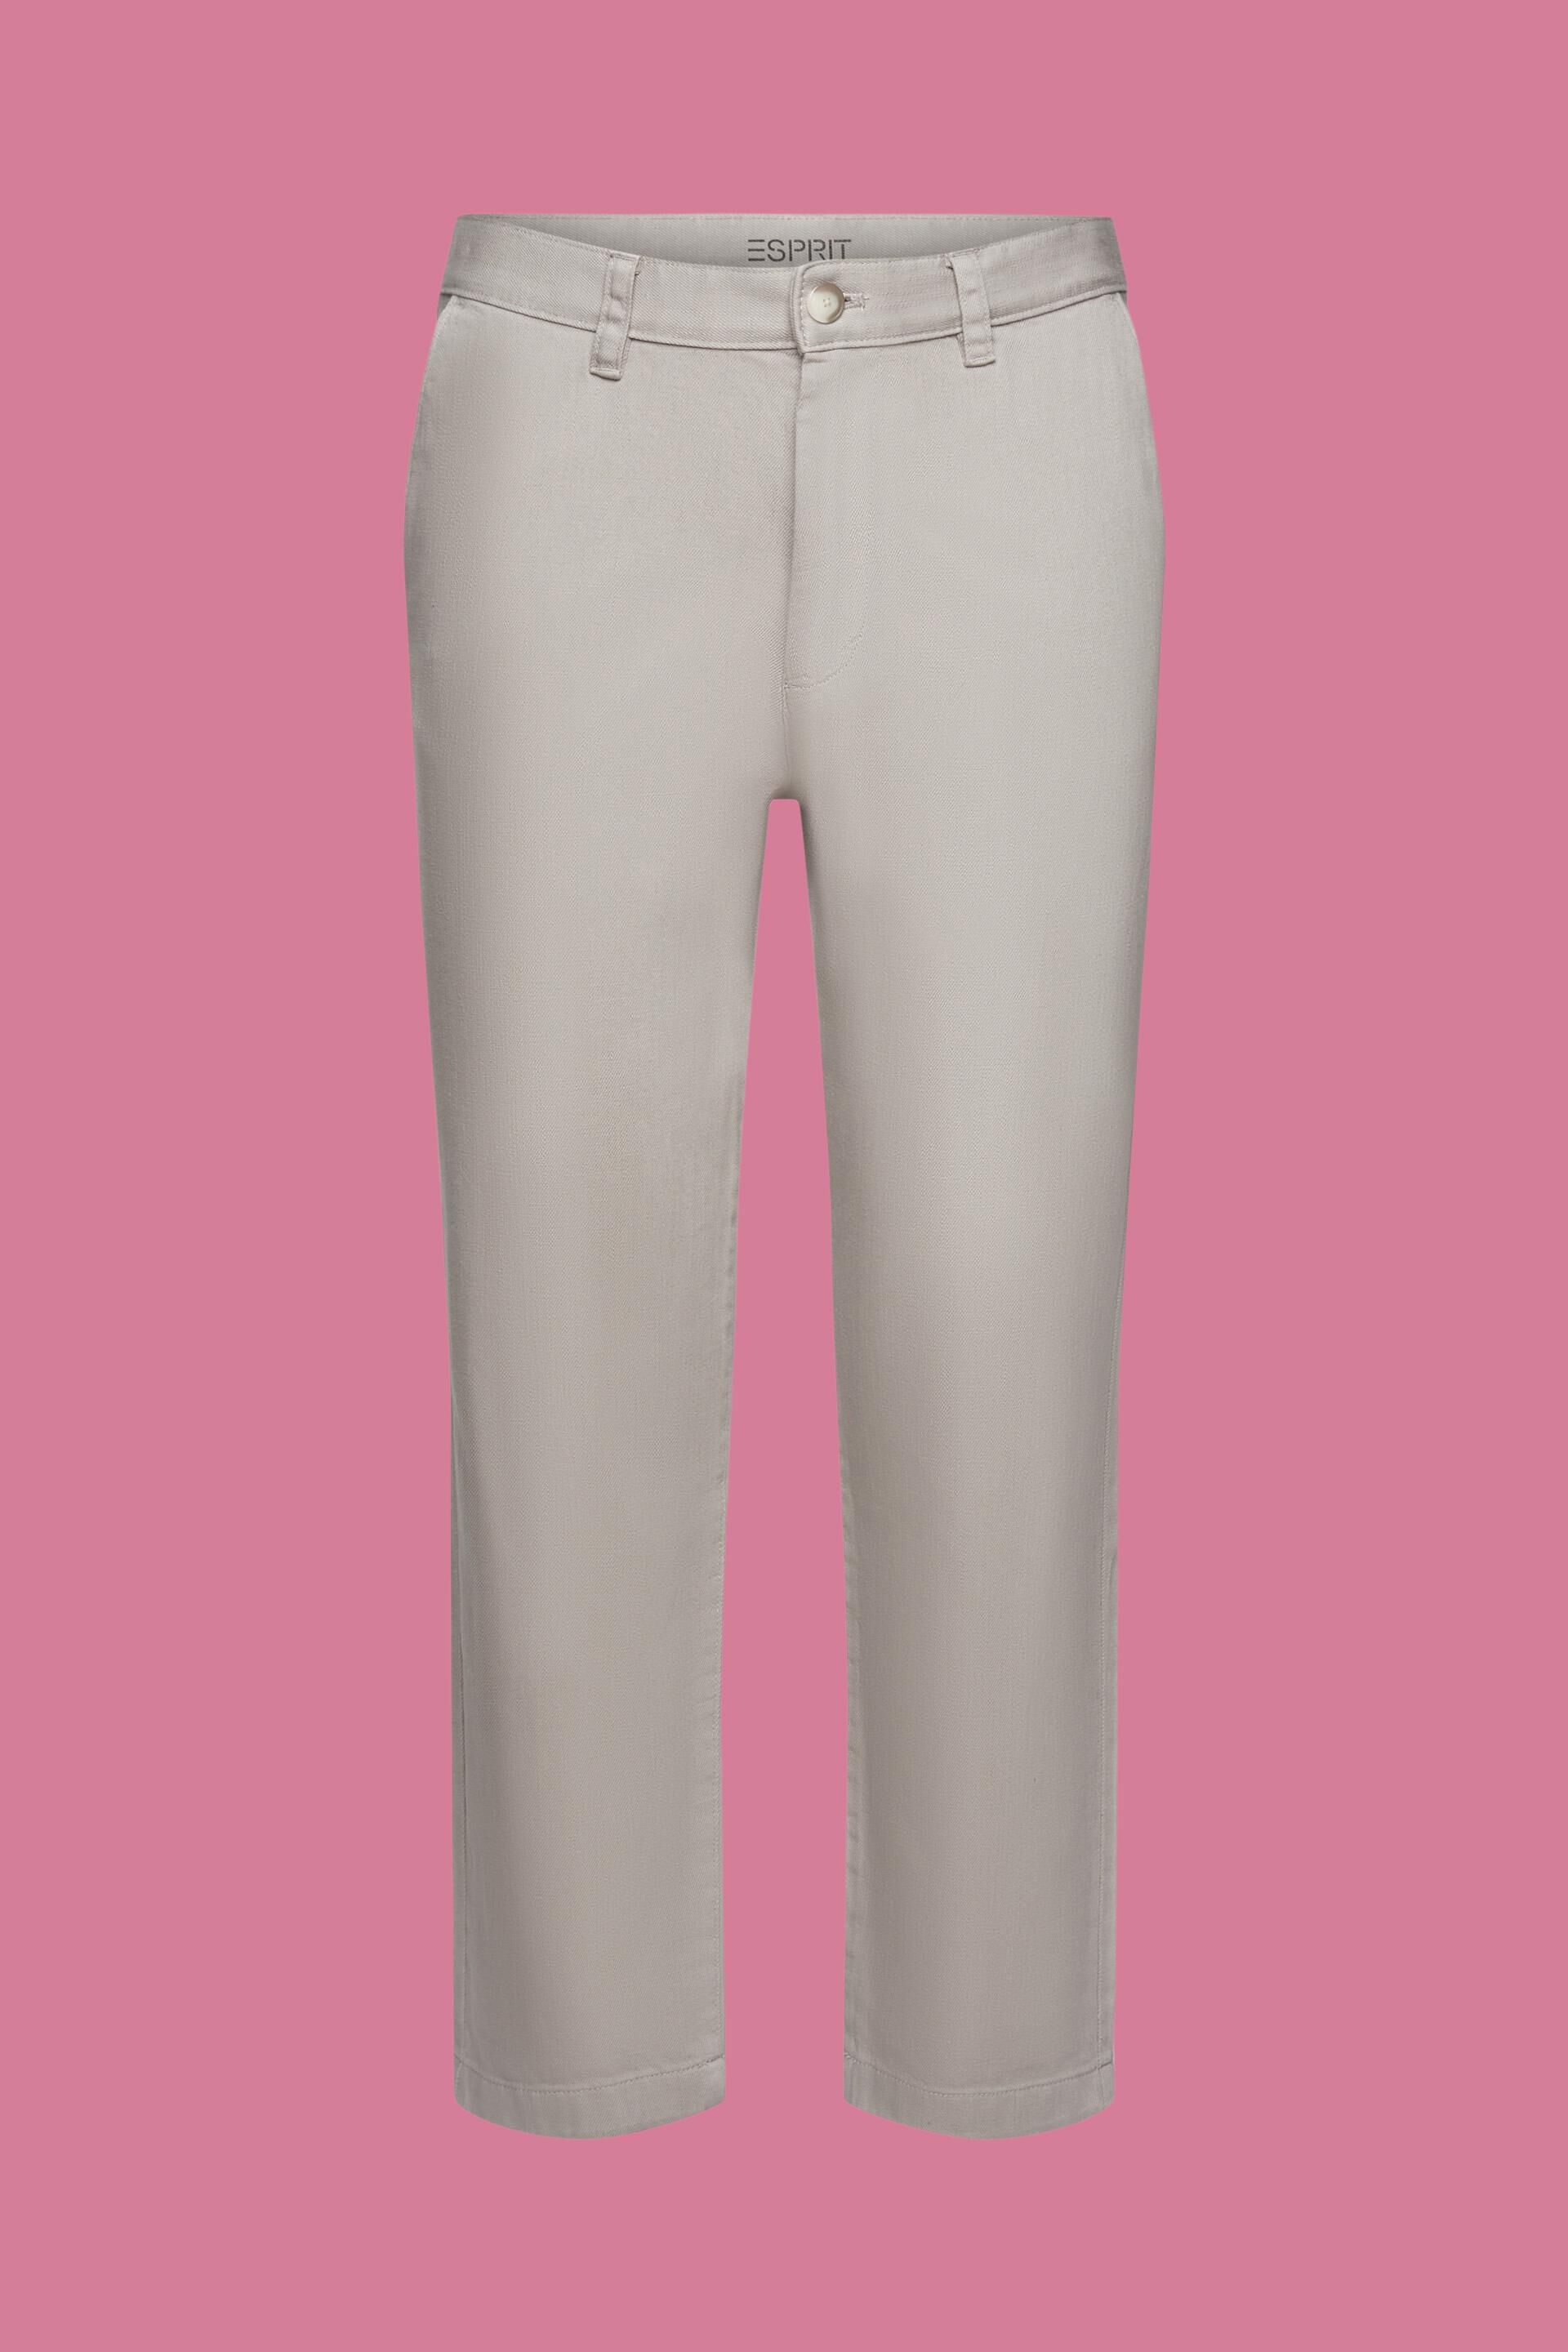 Summer Womens Cotton Linen Baggy Casual Harem Pants Trousers Elastic Waist  S-5XL | eBay